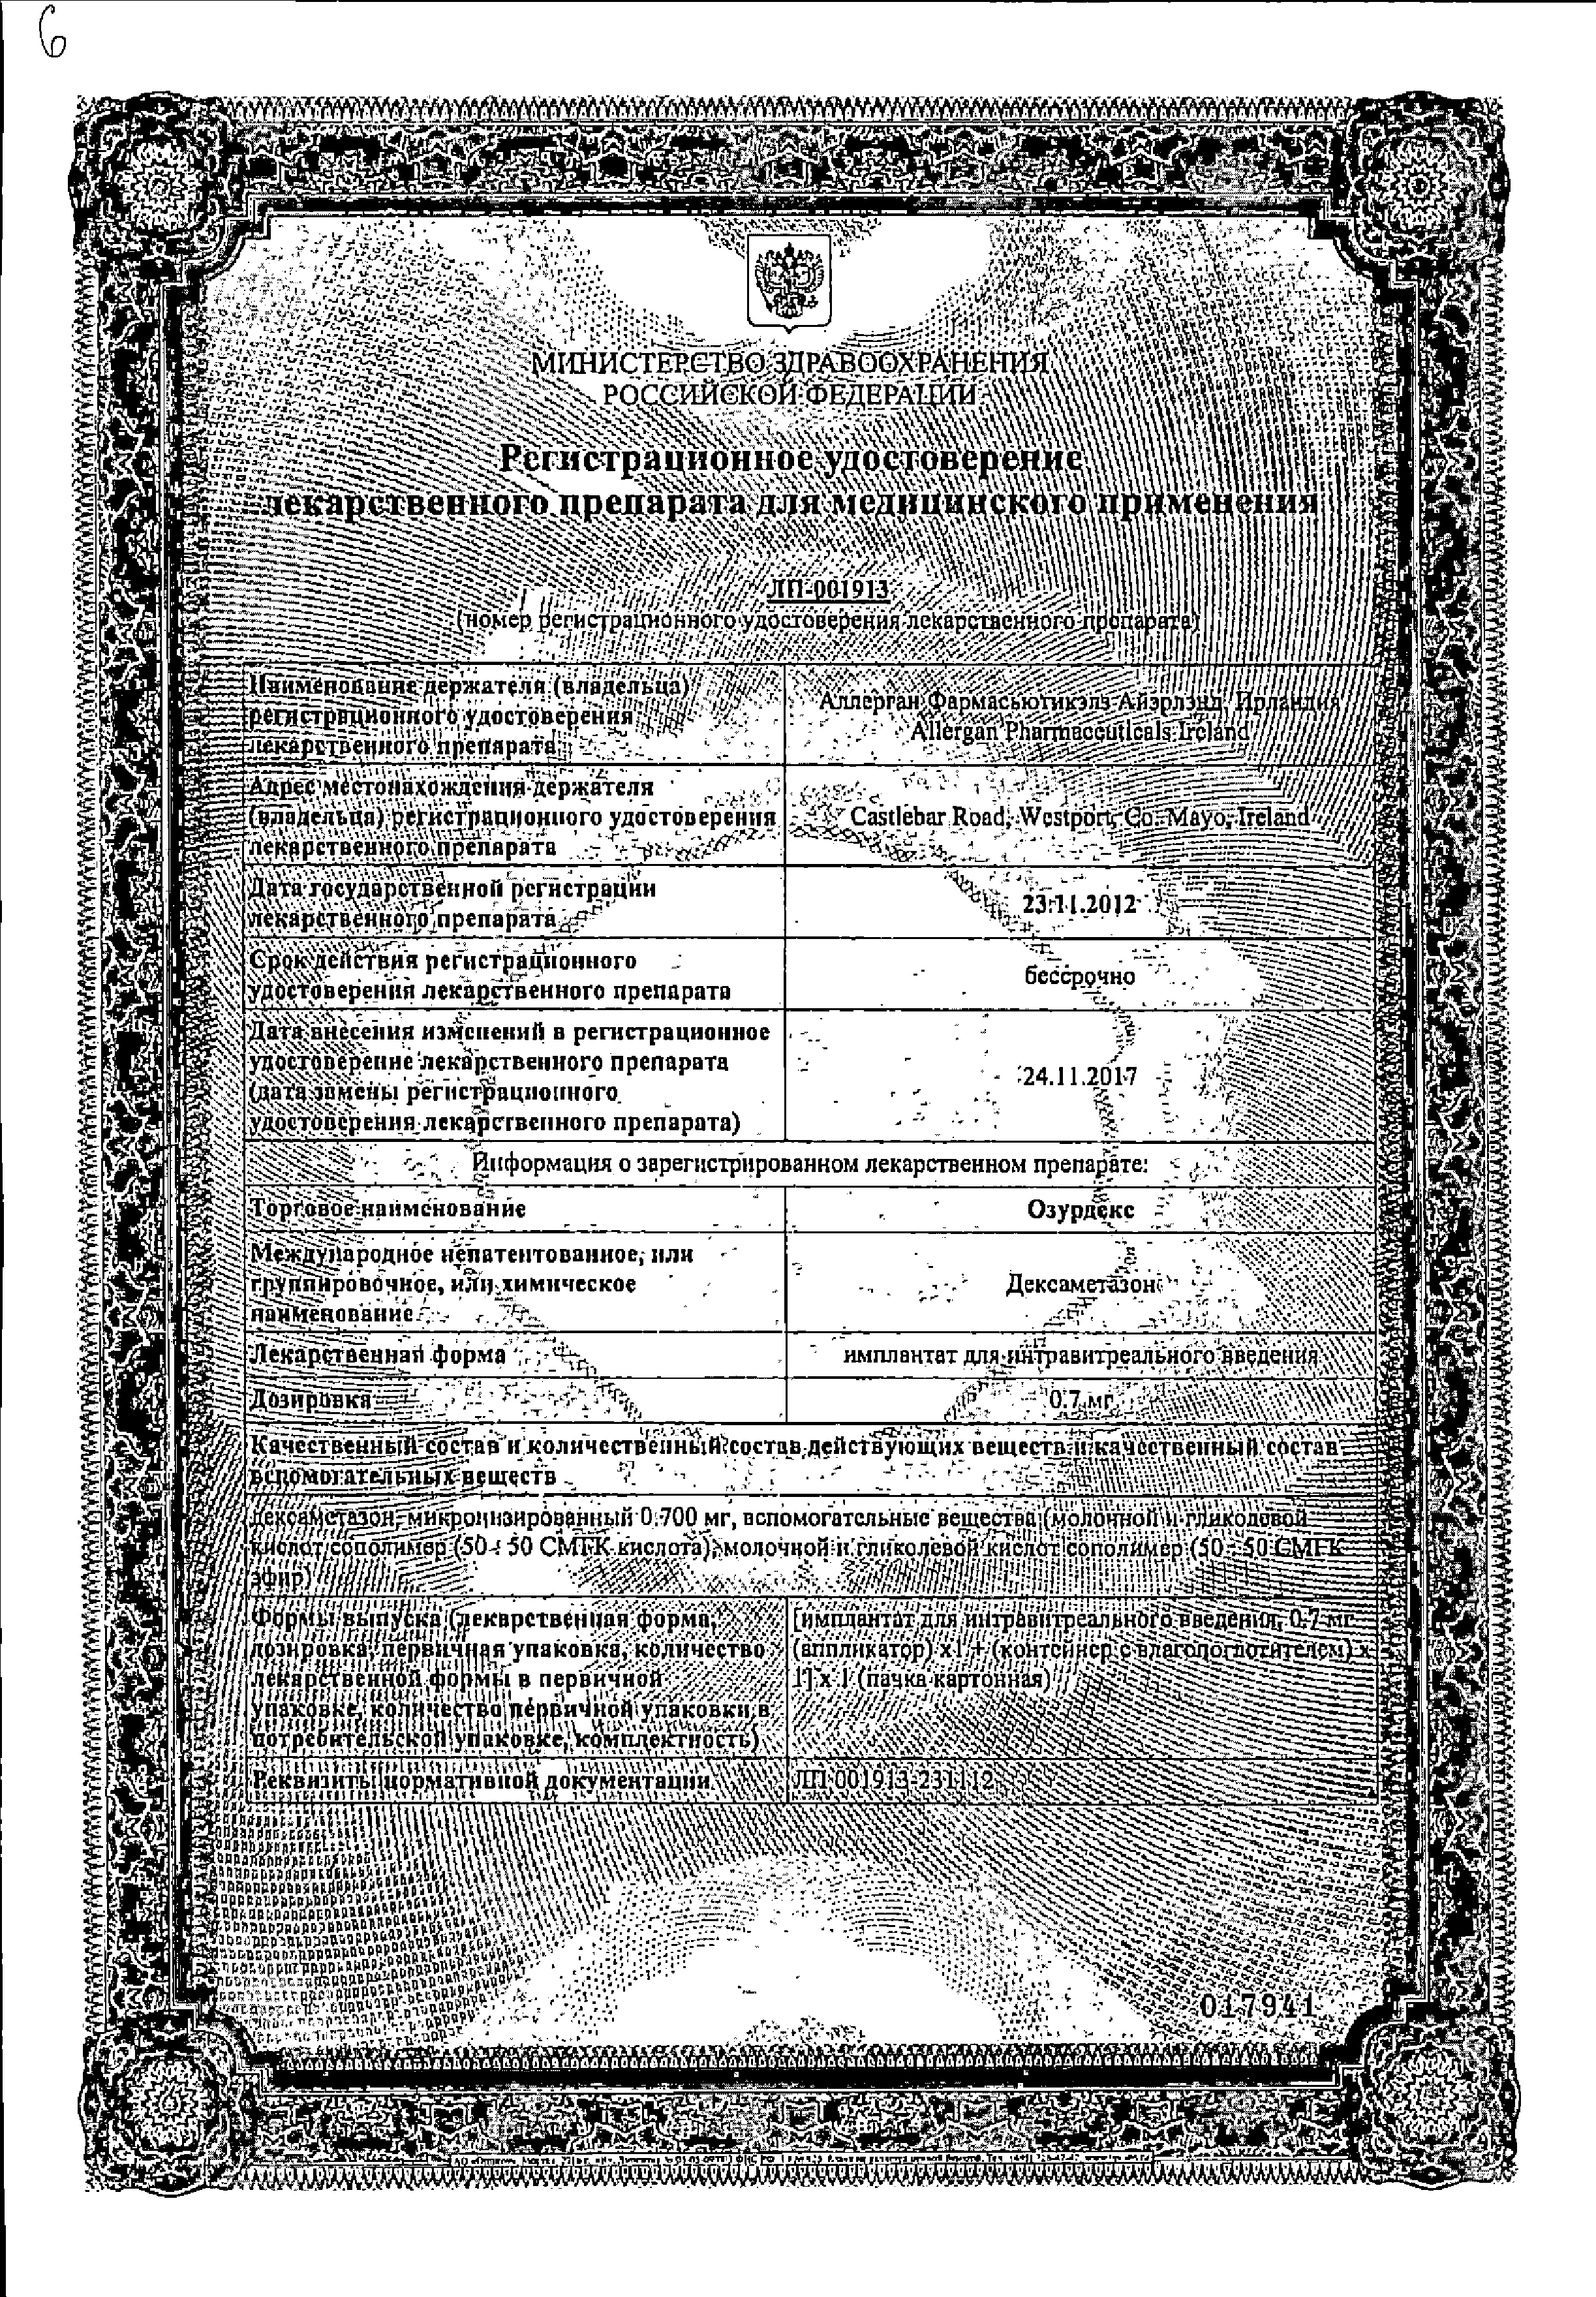 Озурдекс сертификат